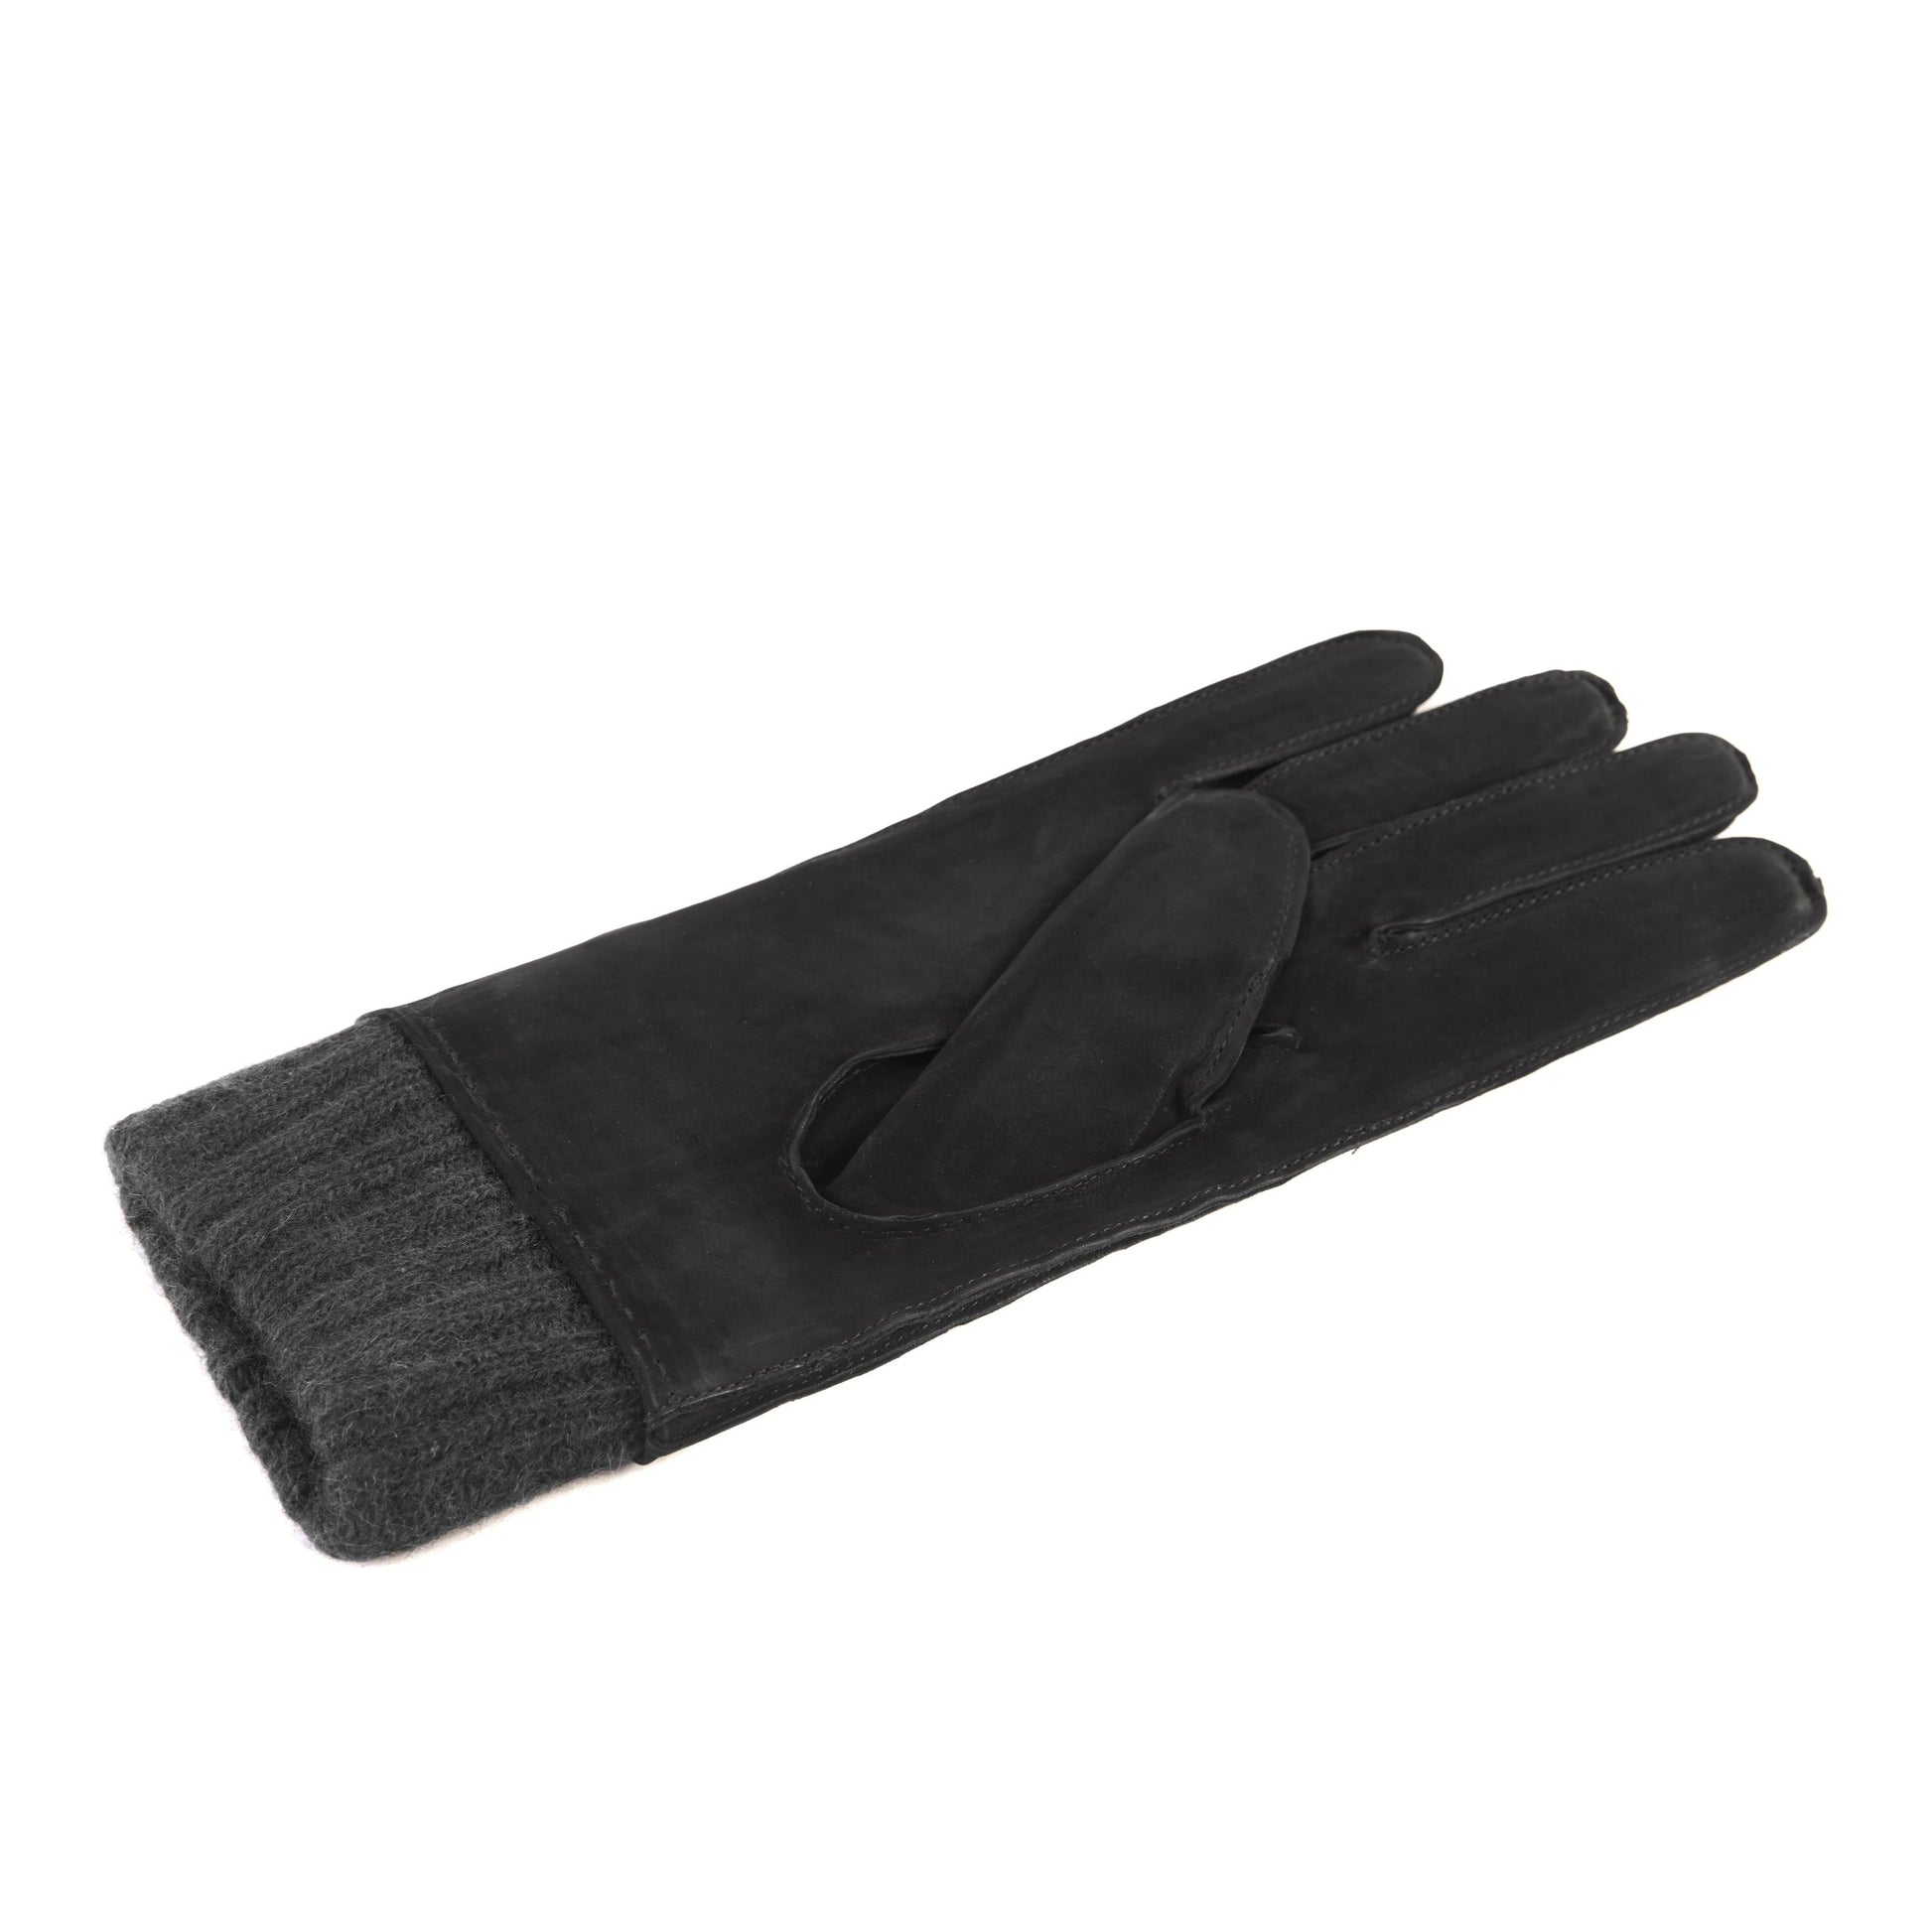 Men's black nubuk gloves with dark grey cashmere lining with cuff